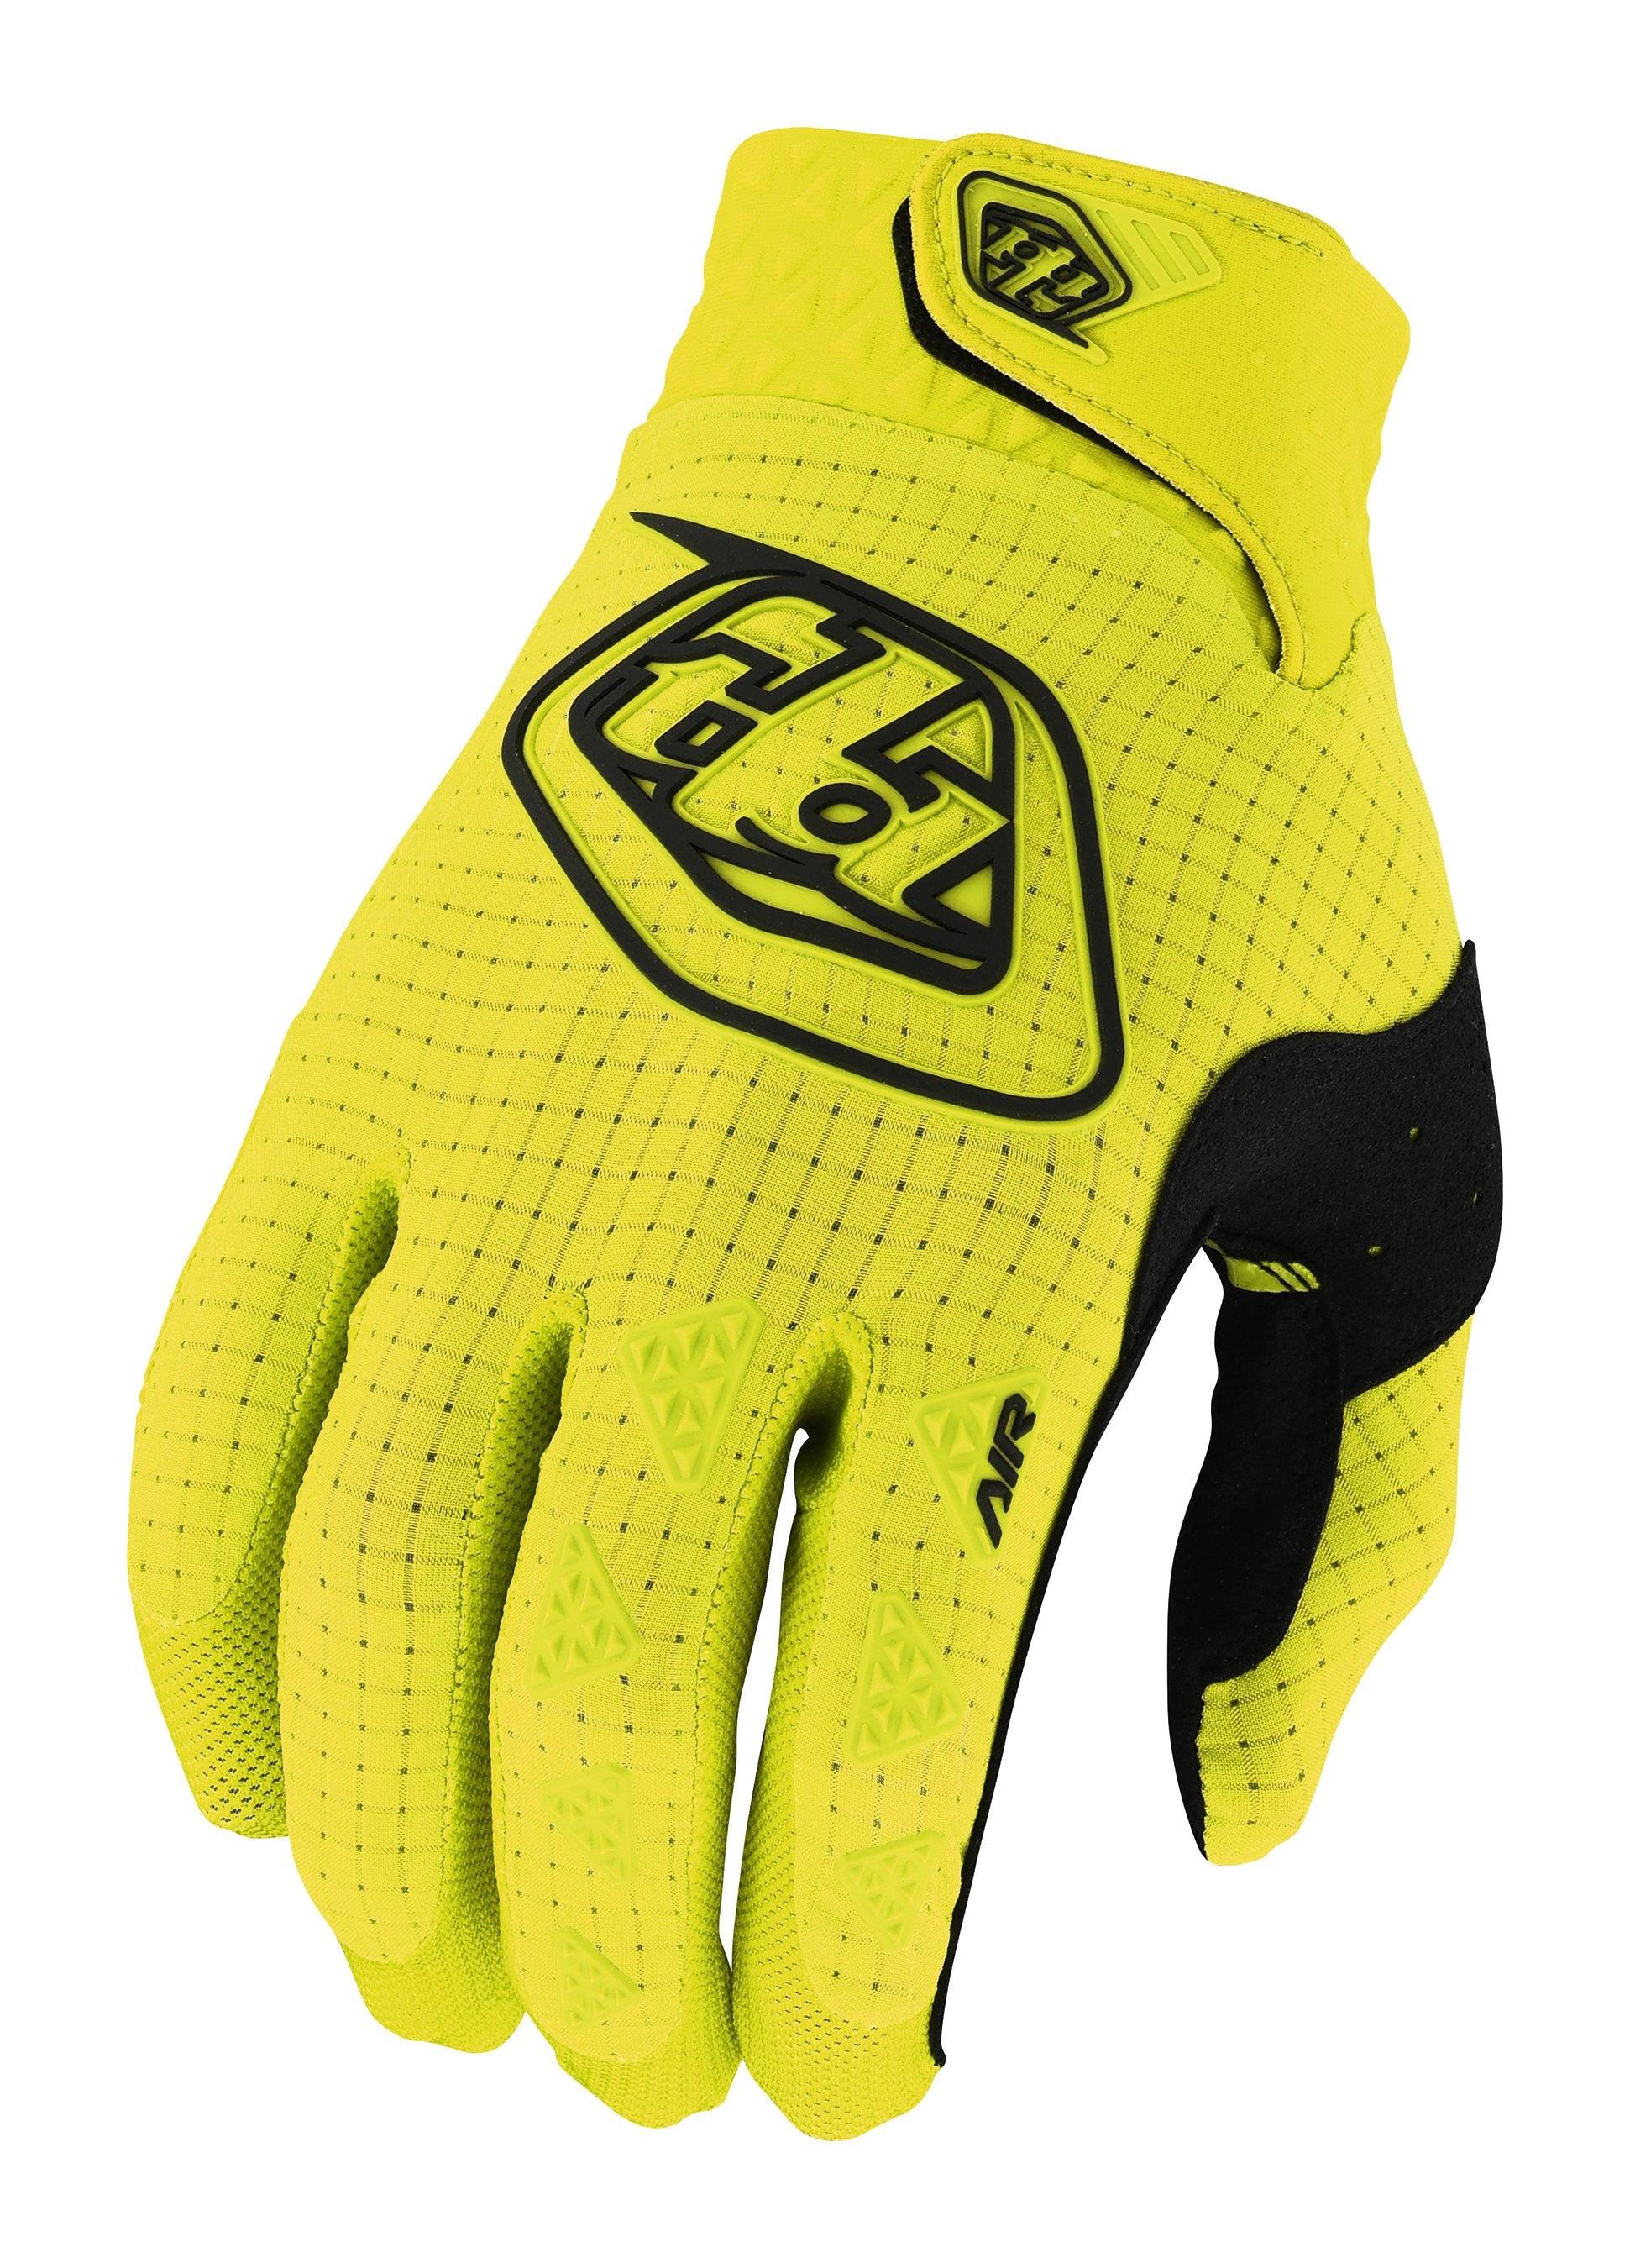 Troy Lee Designs Air Glove - Liquid-Life #Wähle Deine Farbe_Solid glo yellow